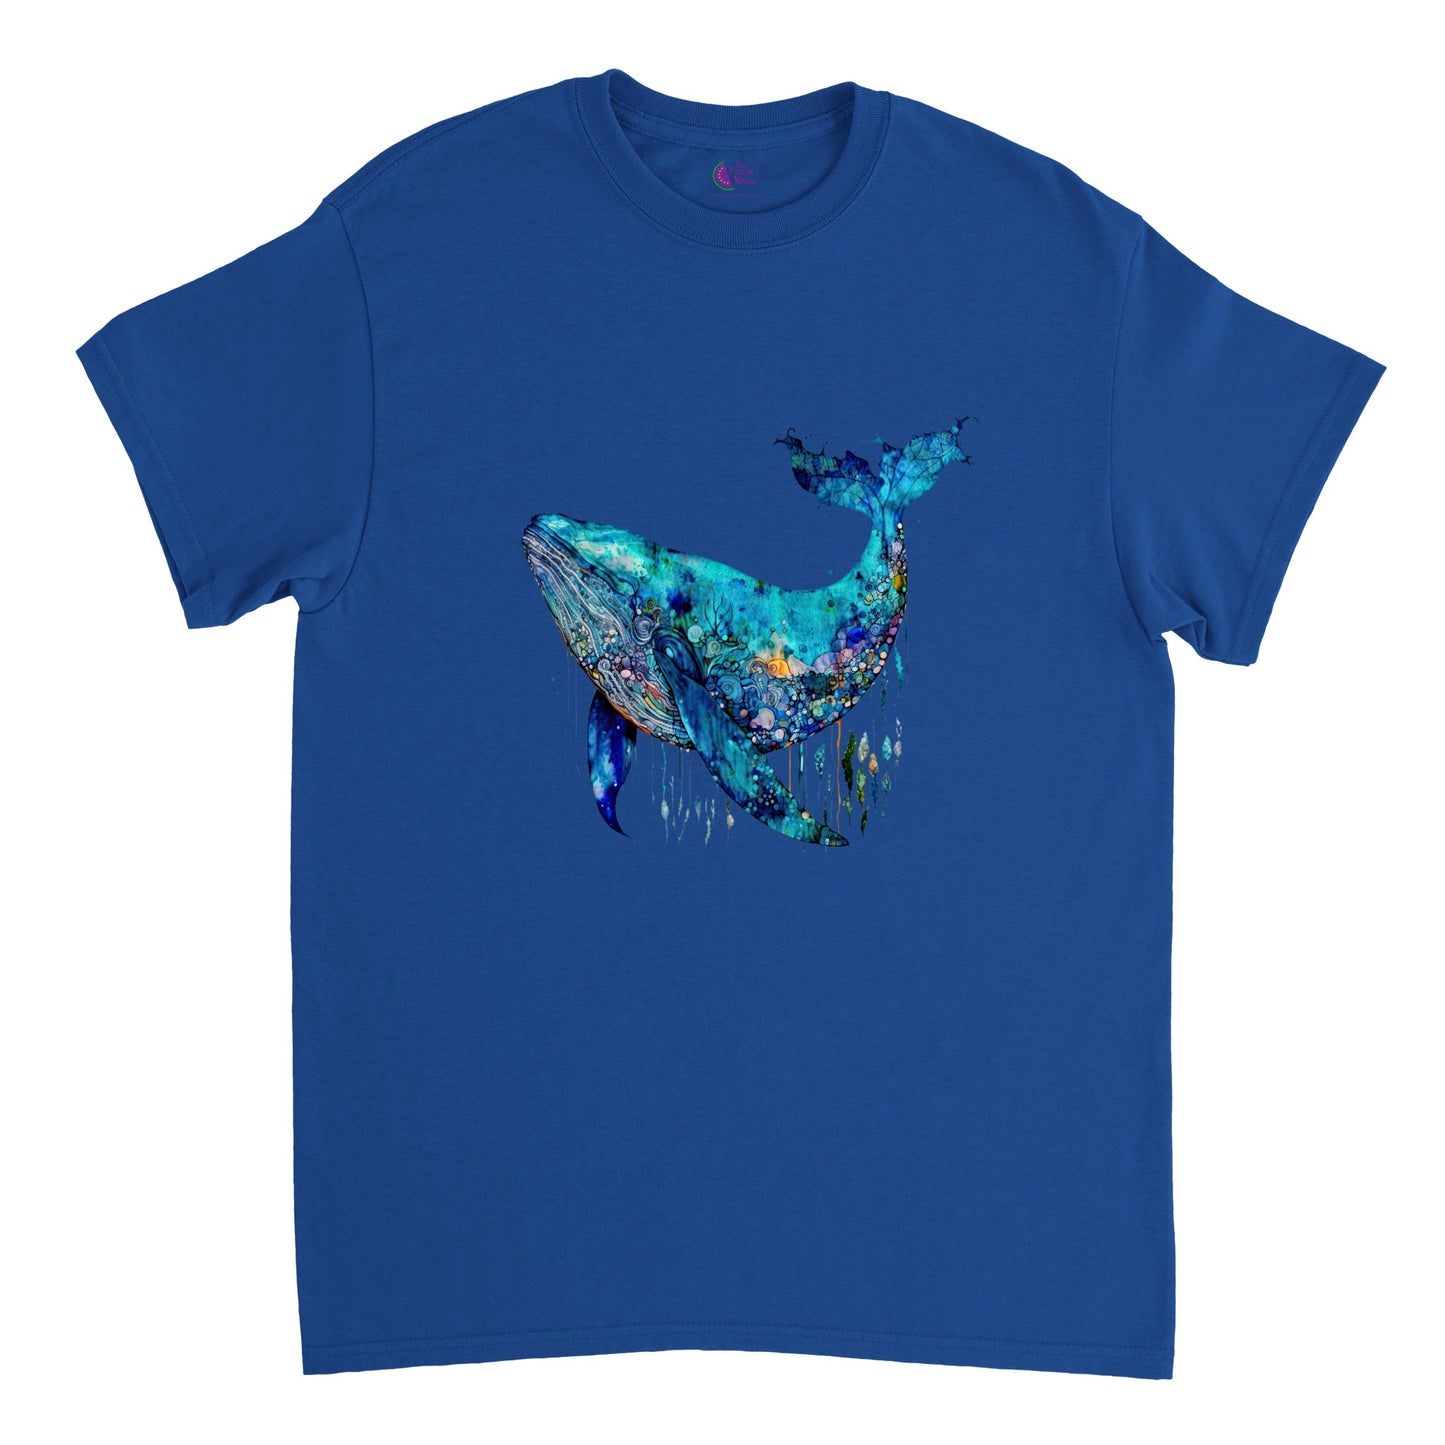 Royal blue t-shirt with a blue whale print